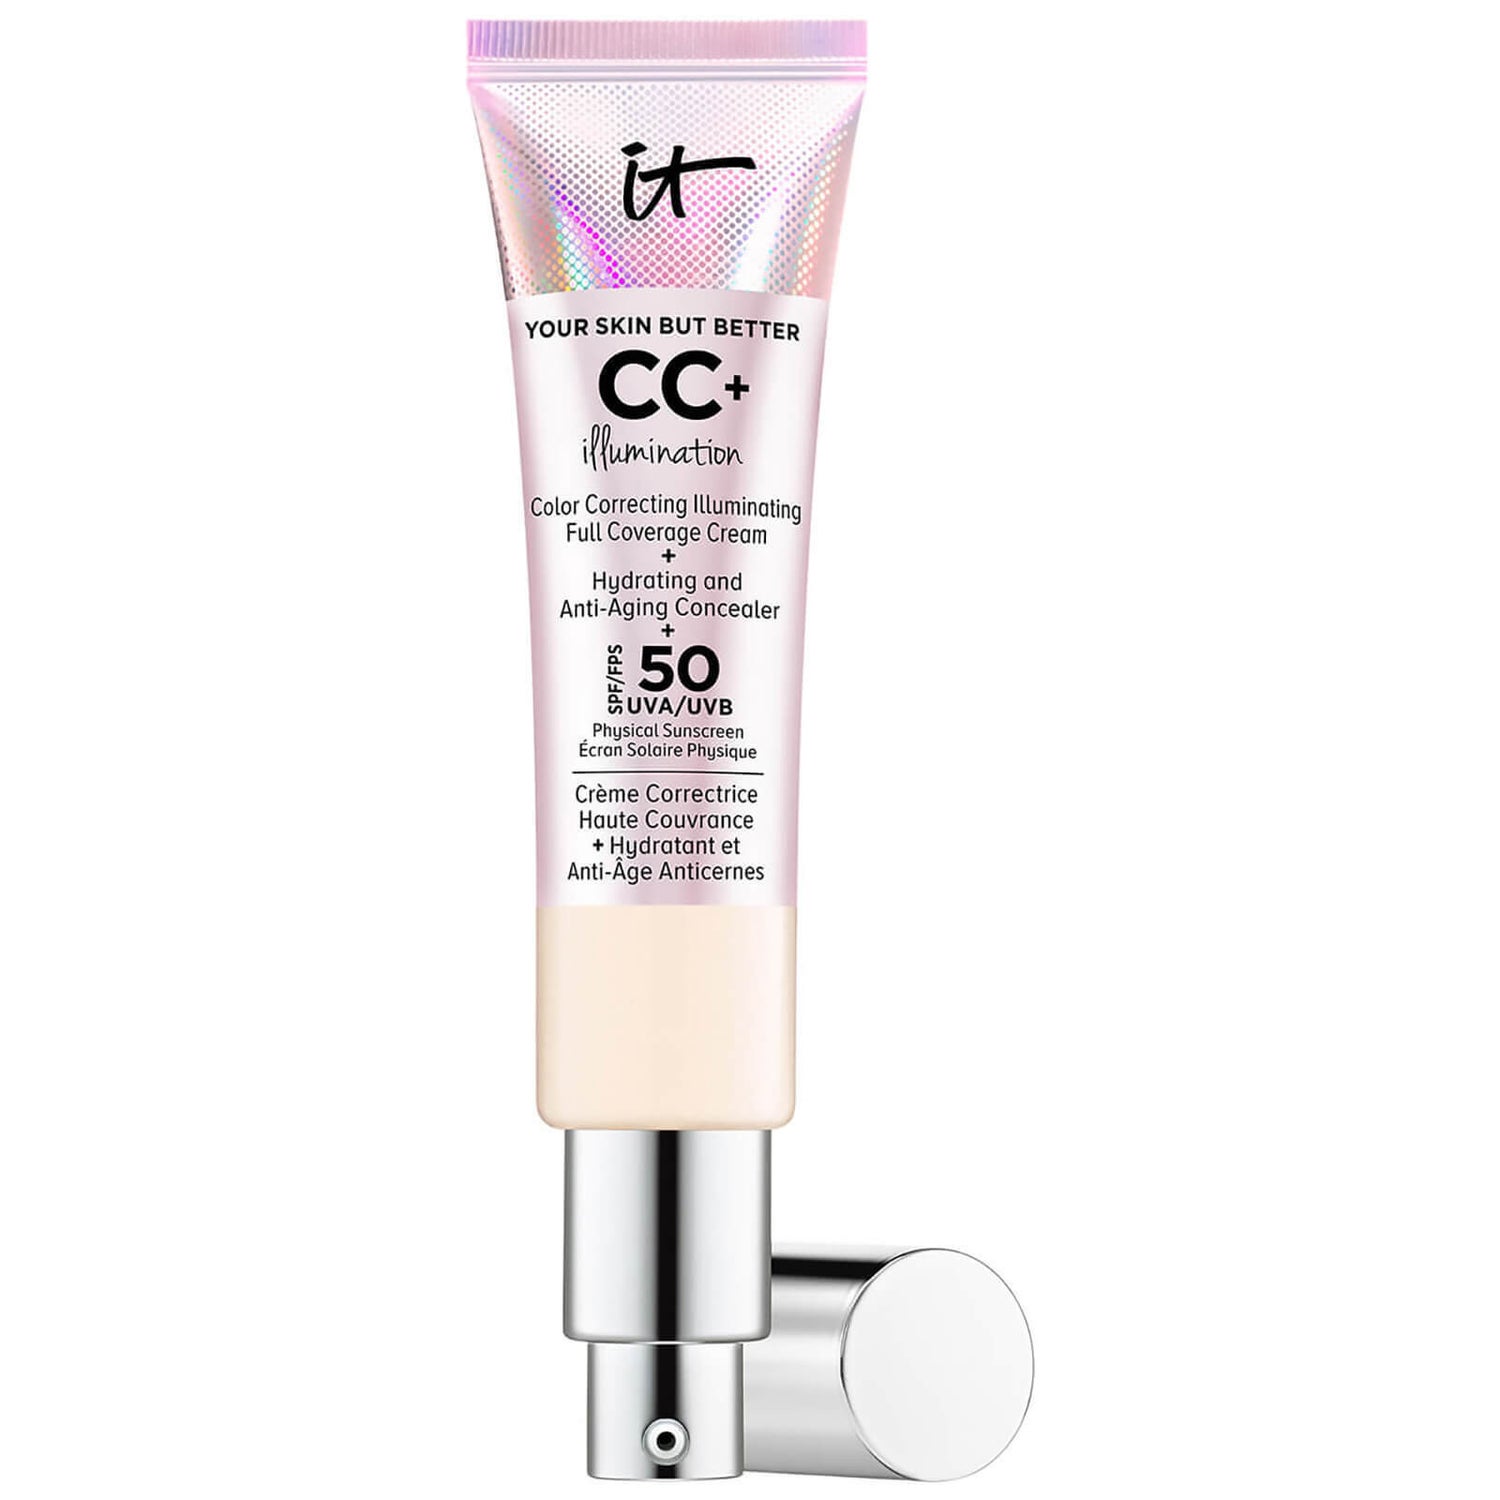 Your Skin But Better CC+ Illumination SPF50 32ml IT Cosmetics (varie tonalità)